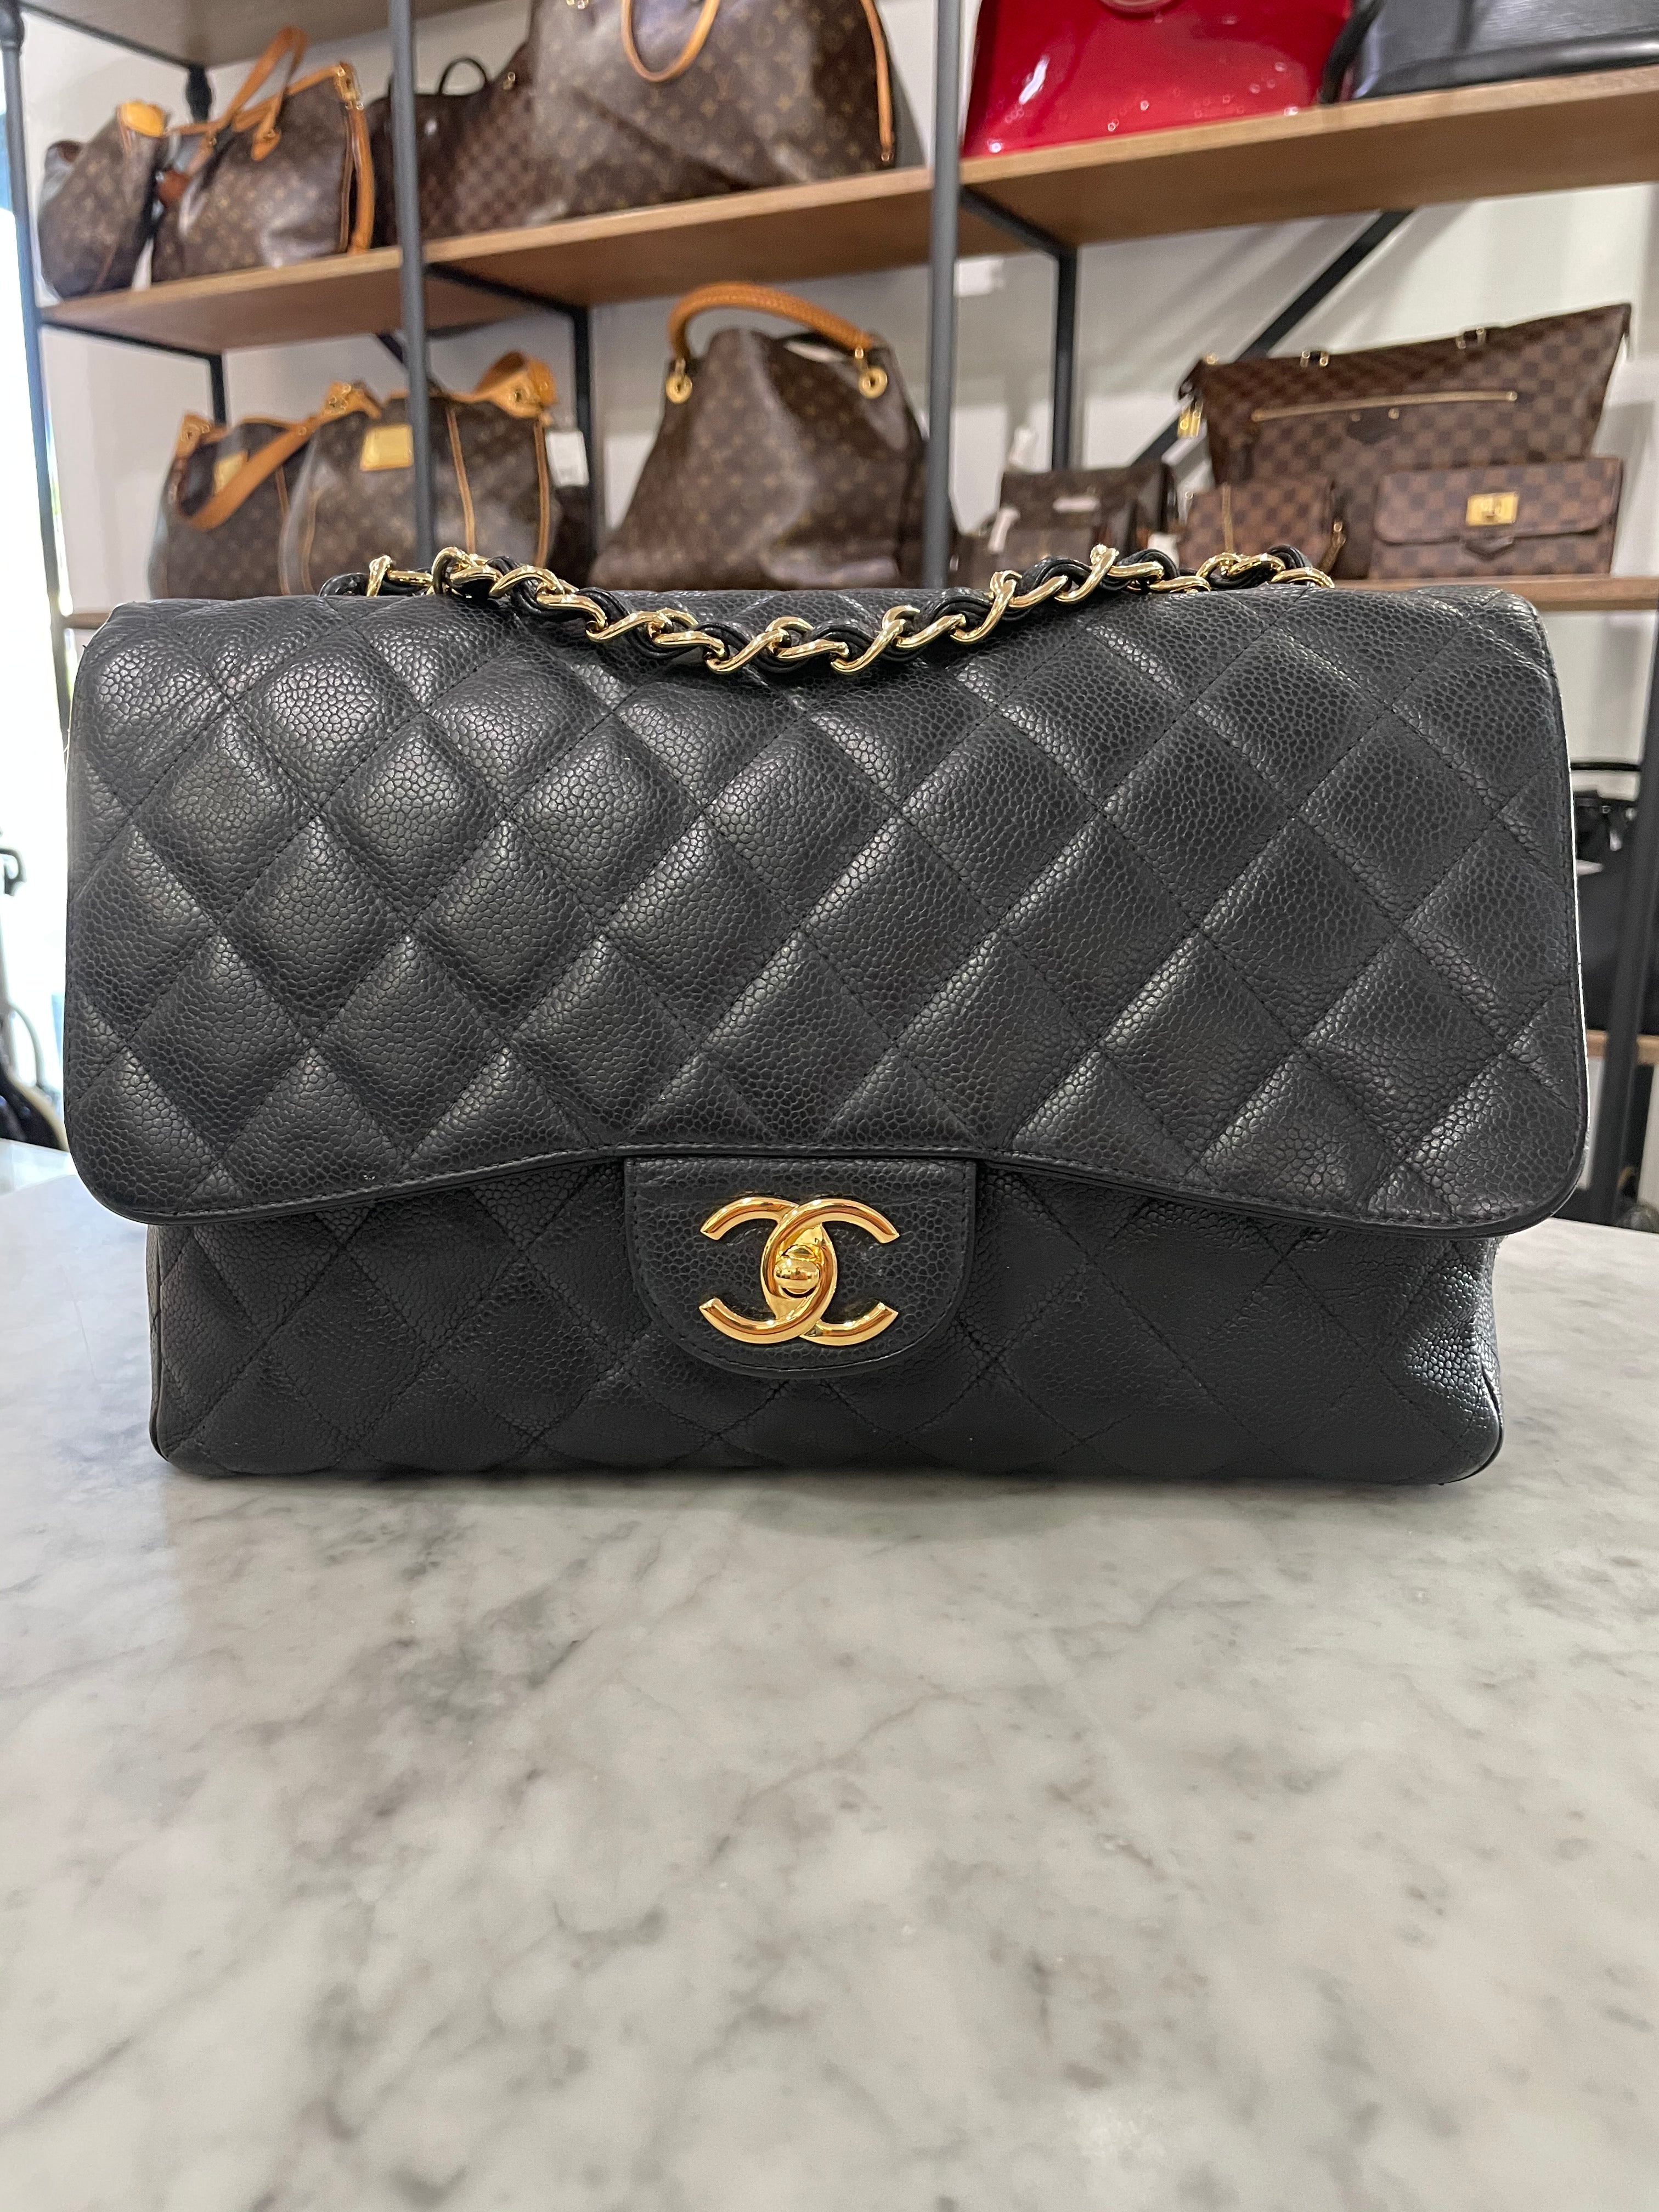 Chanel Marine Patent Leather Jumbo Classic Flap Bag Auction